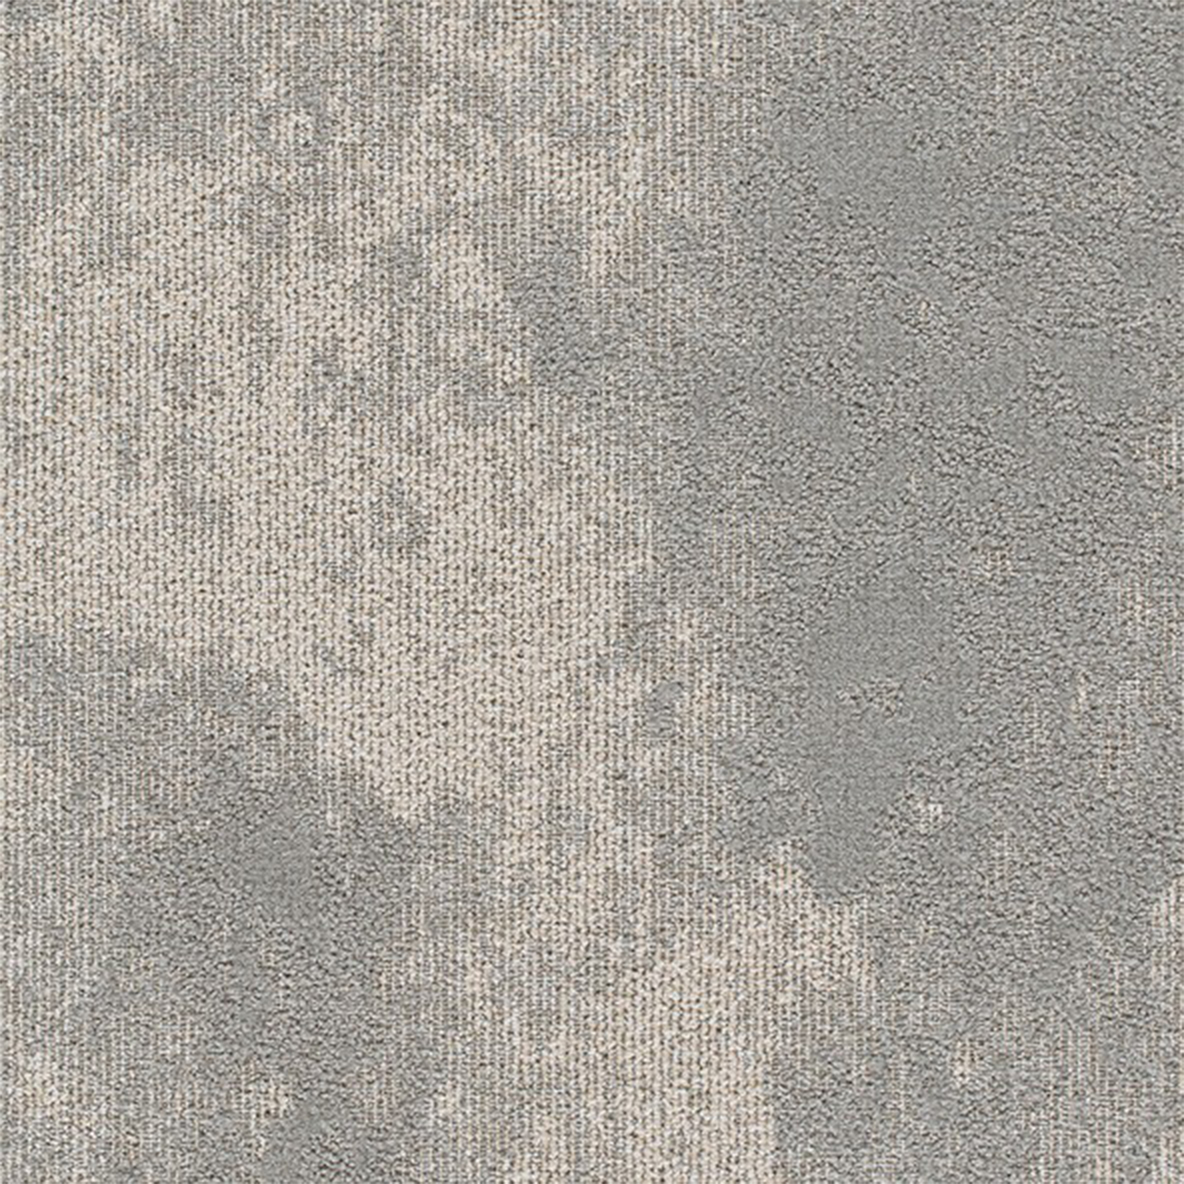 High Tide Commercial Carpet Tile .31 Inch x 50x50 cm per Tile Oyster close up